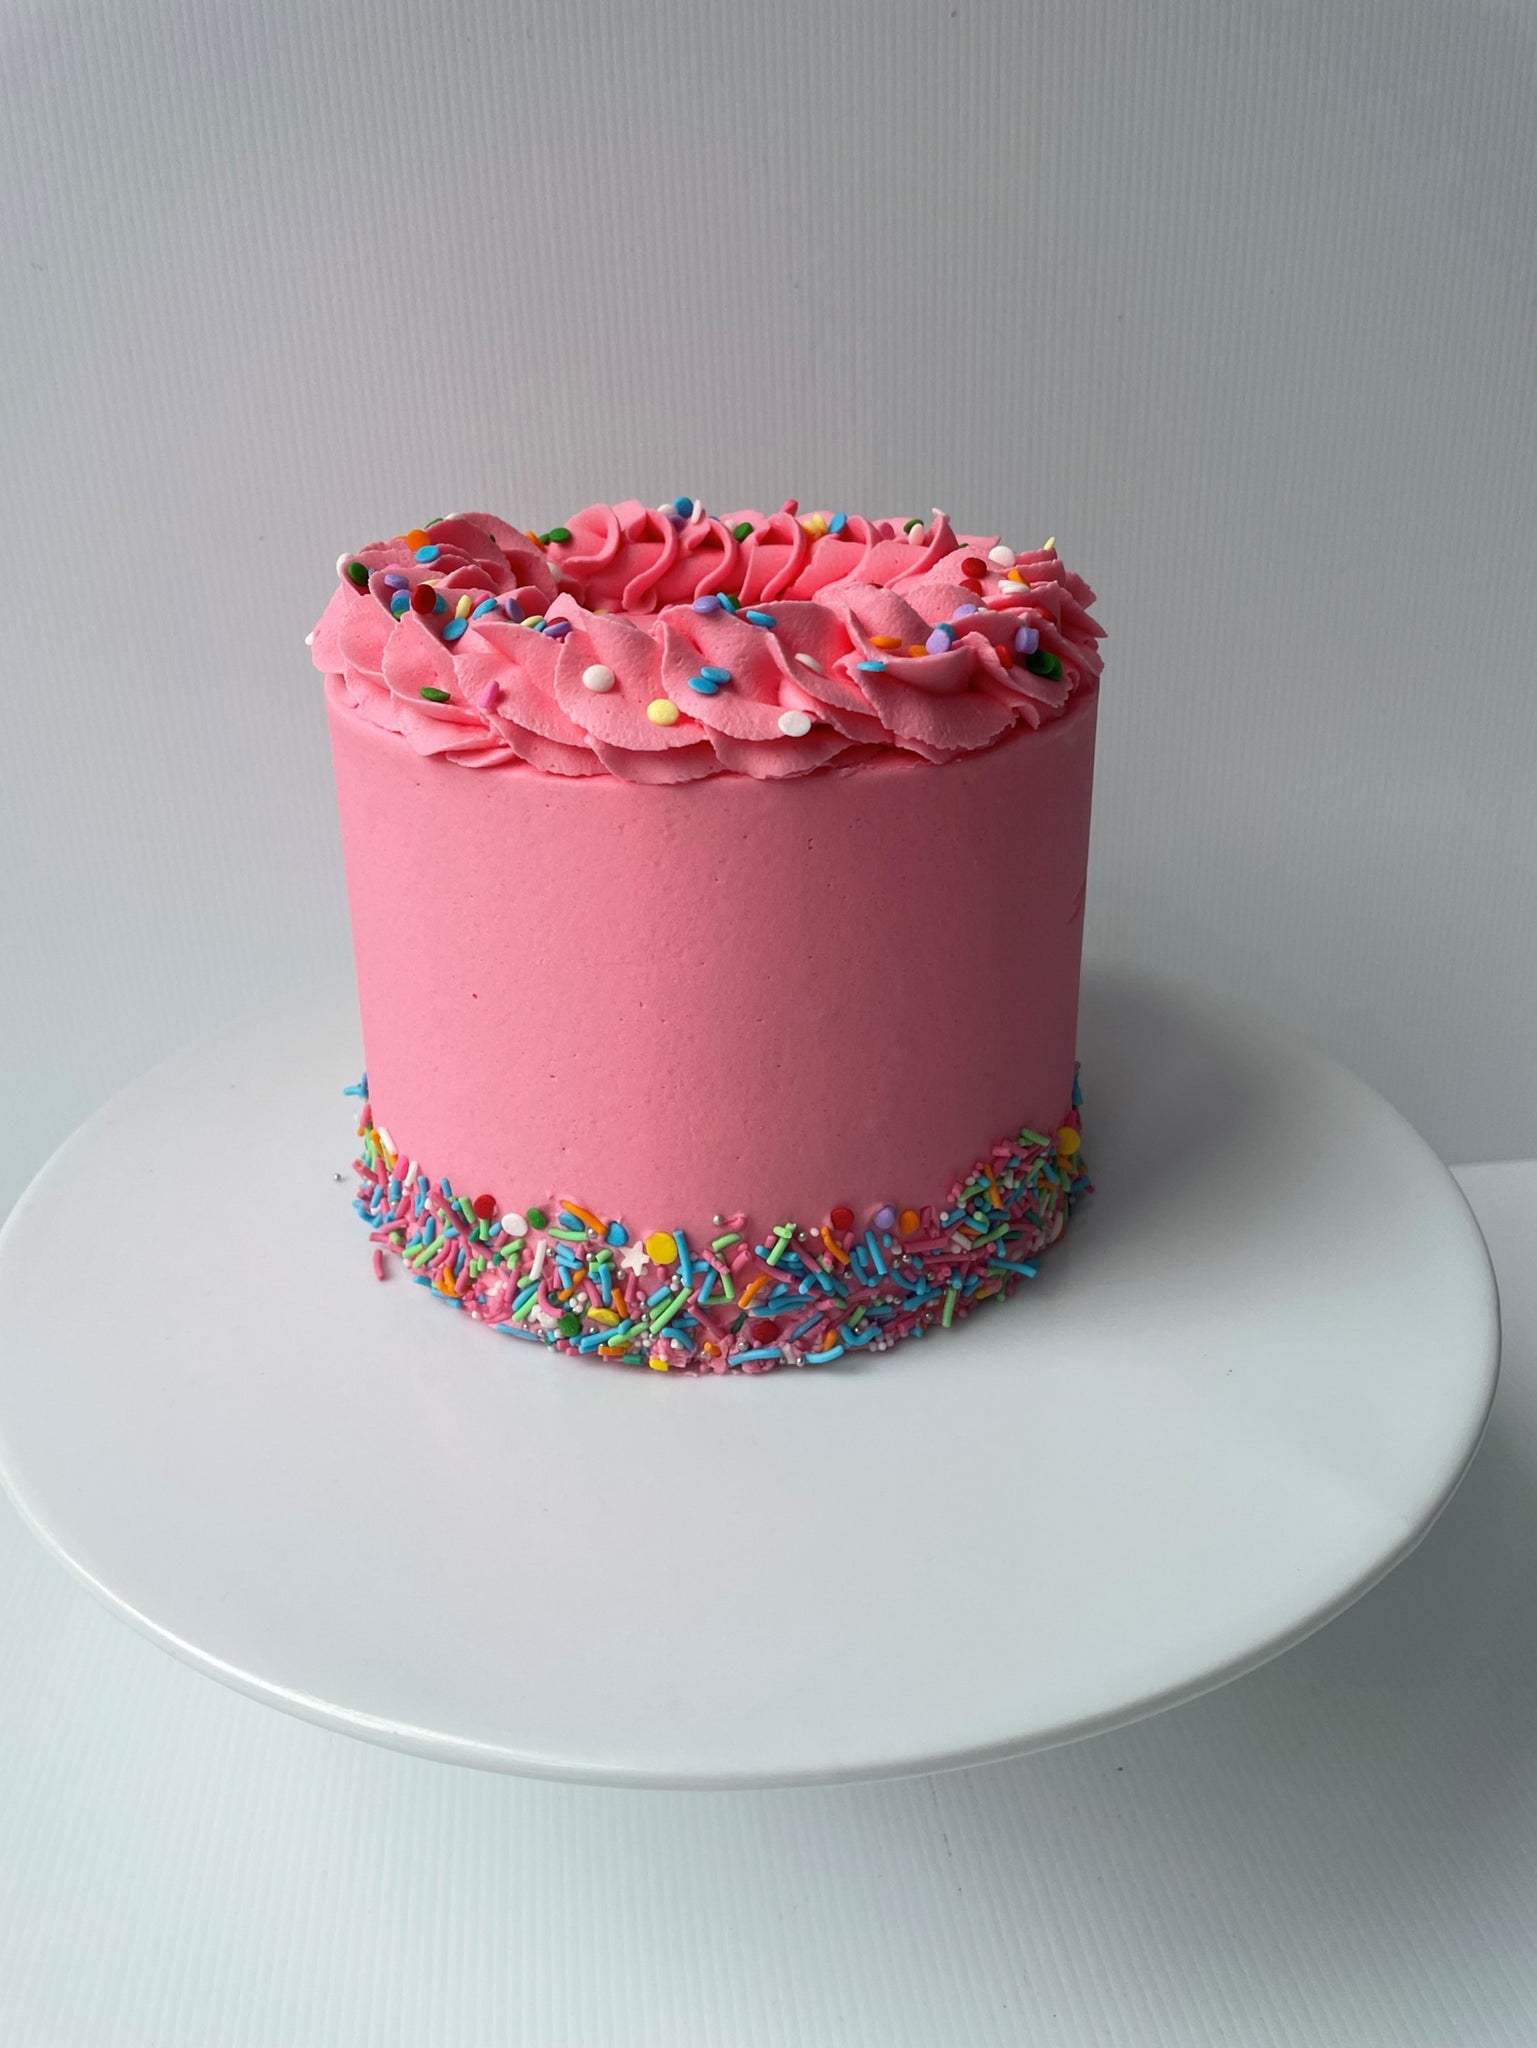 I Tried Pillsbury's Funfetti Layer Cake Recipe | The Kitchn